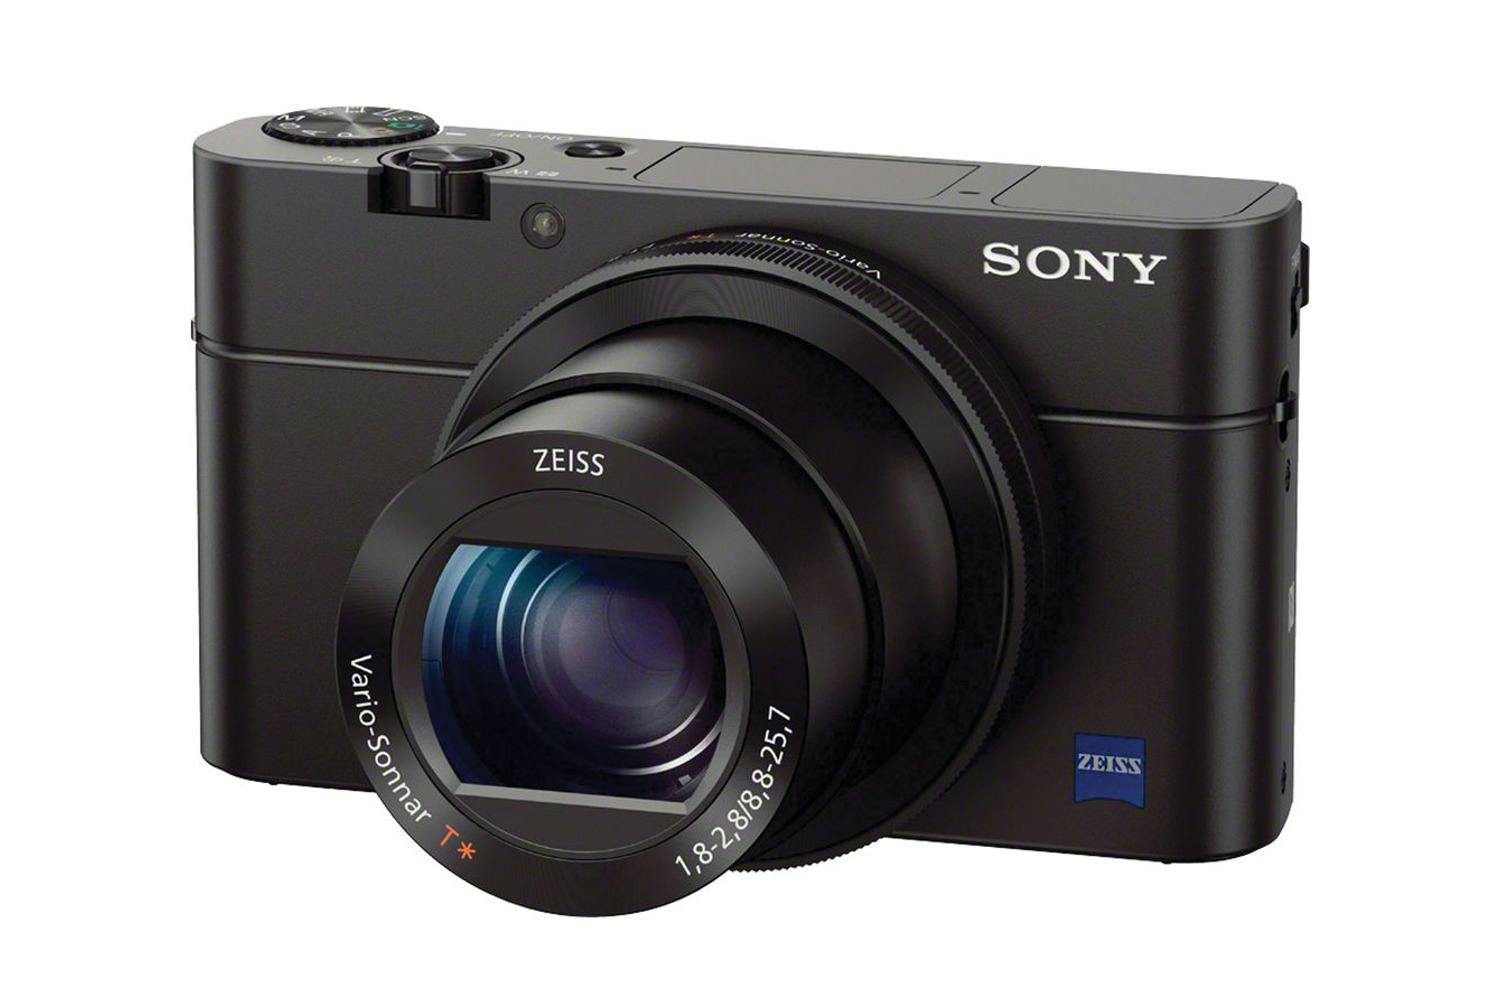 Sony RX100 III Digital Camera